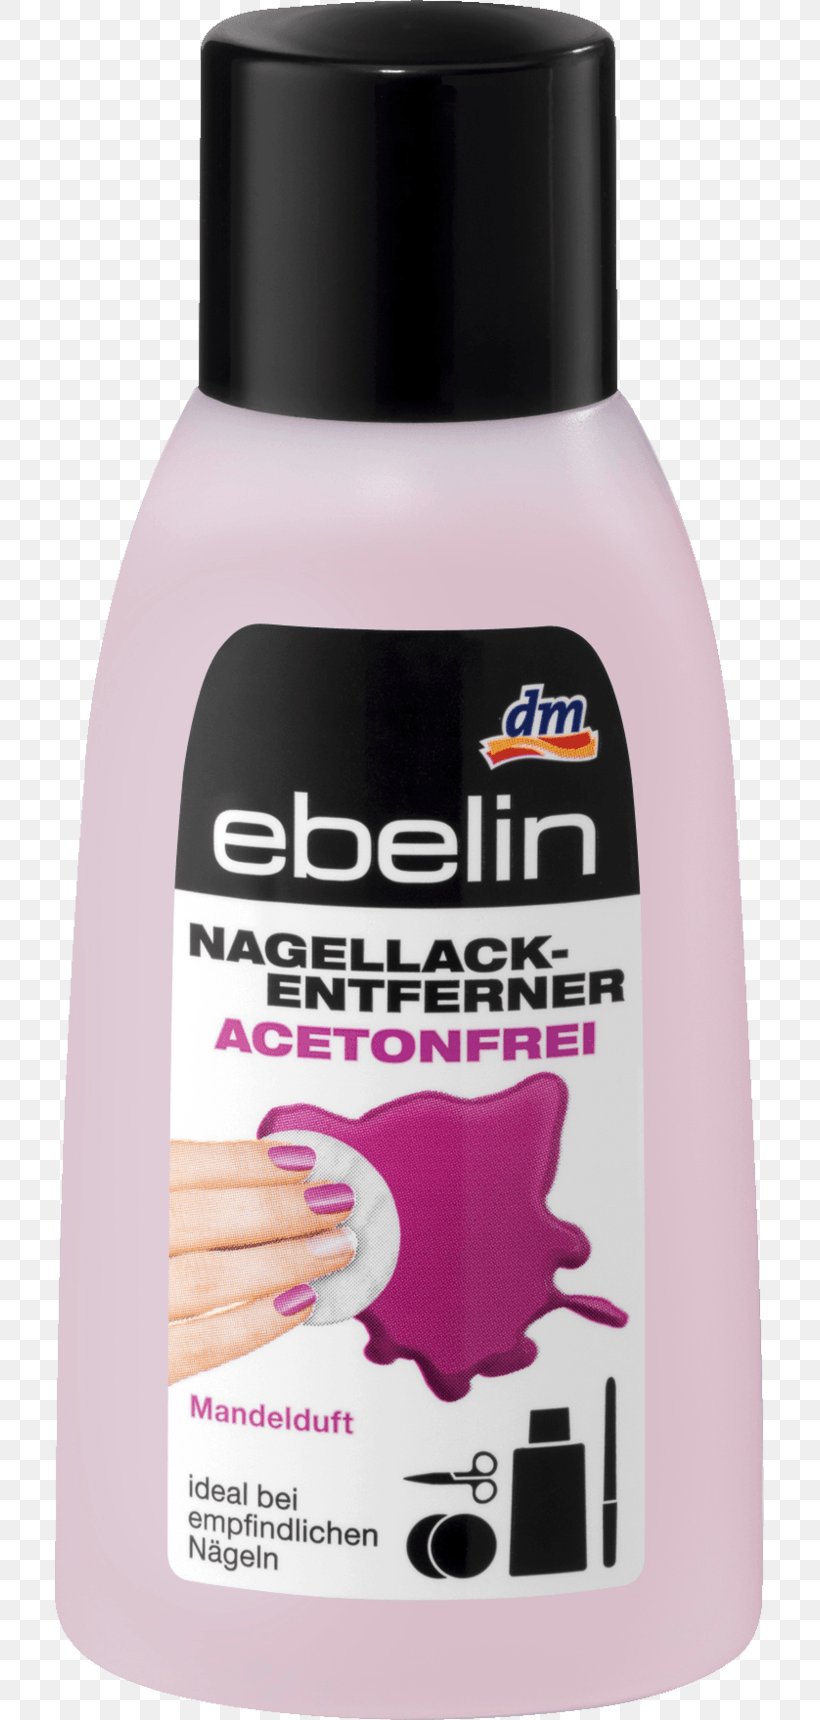 Nagellackentferner Acetone Nail Polish Cleanser, PNG, 709x1720px, Nagellackentferner, Acetone, Cleanser, Cosmetics, Dmdrogerie Markt Download Free